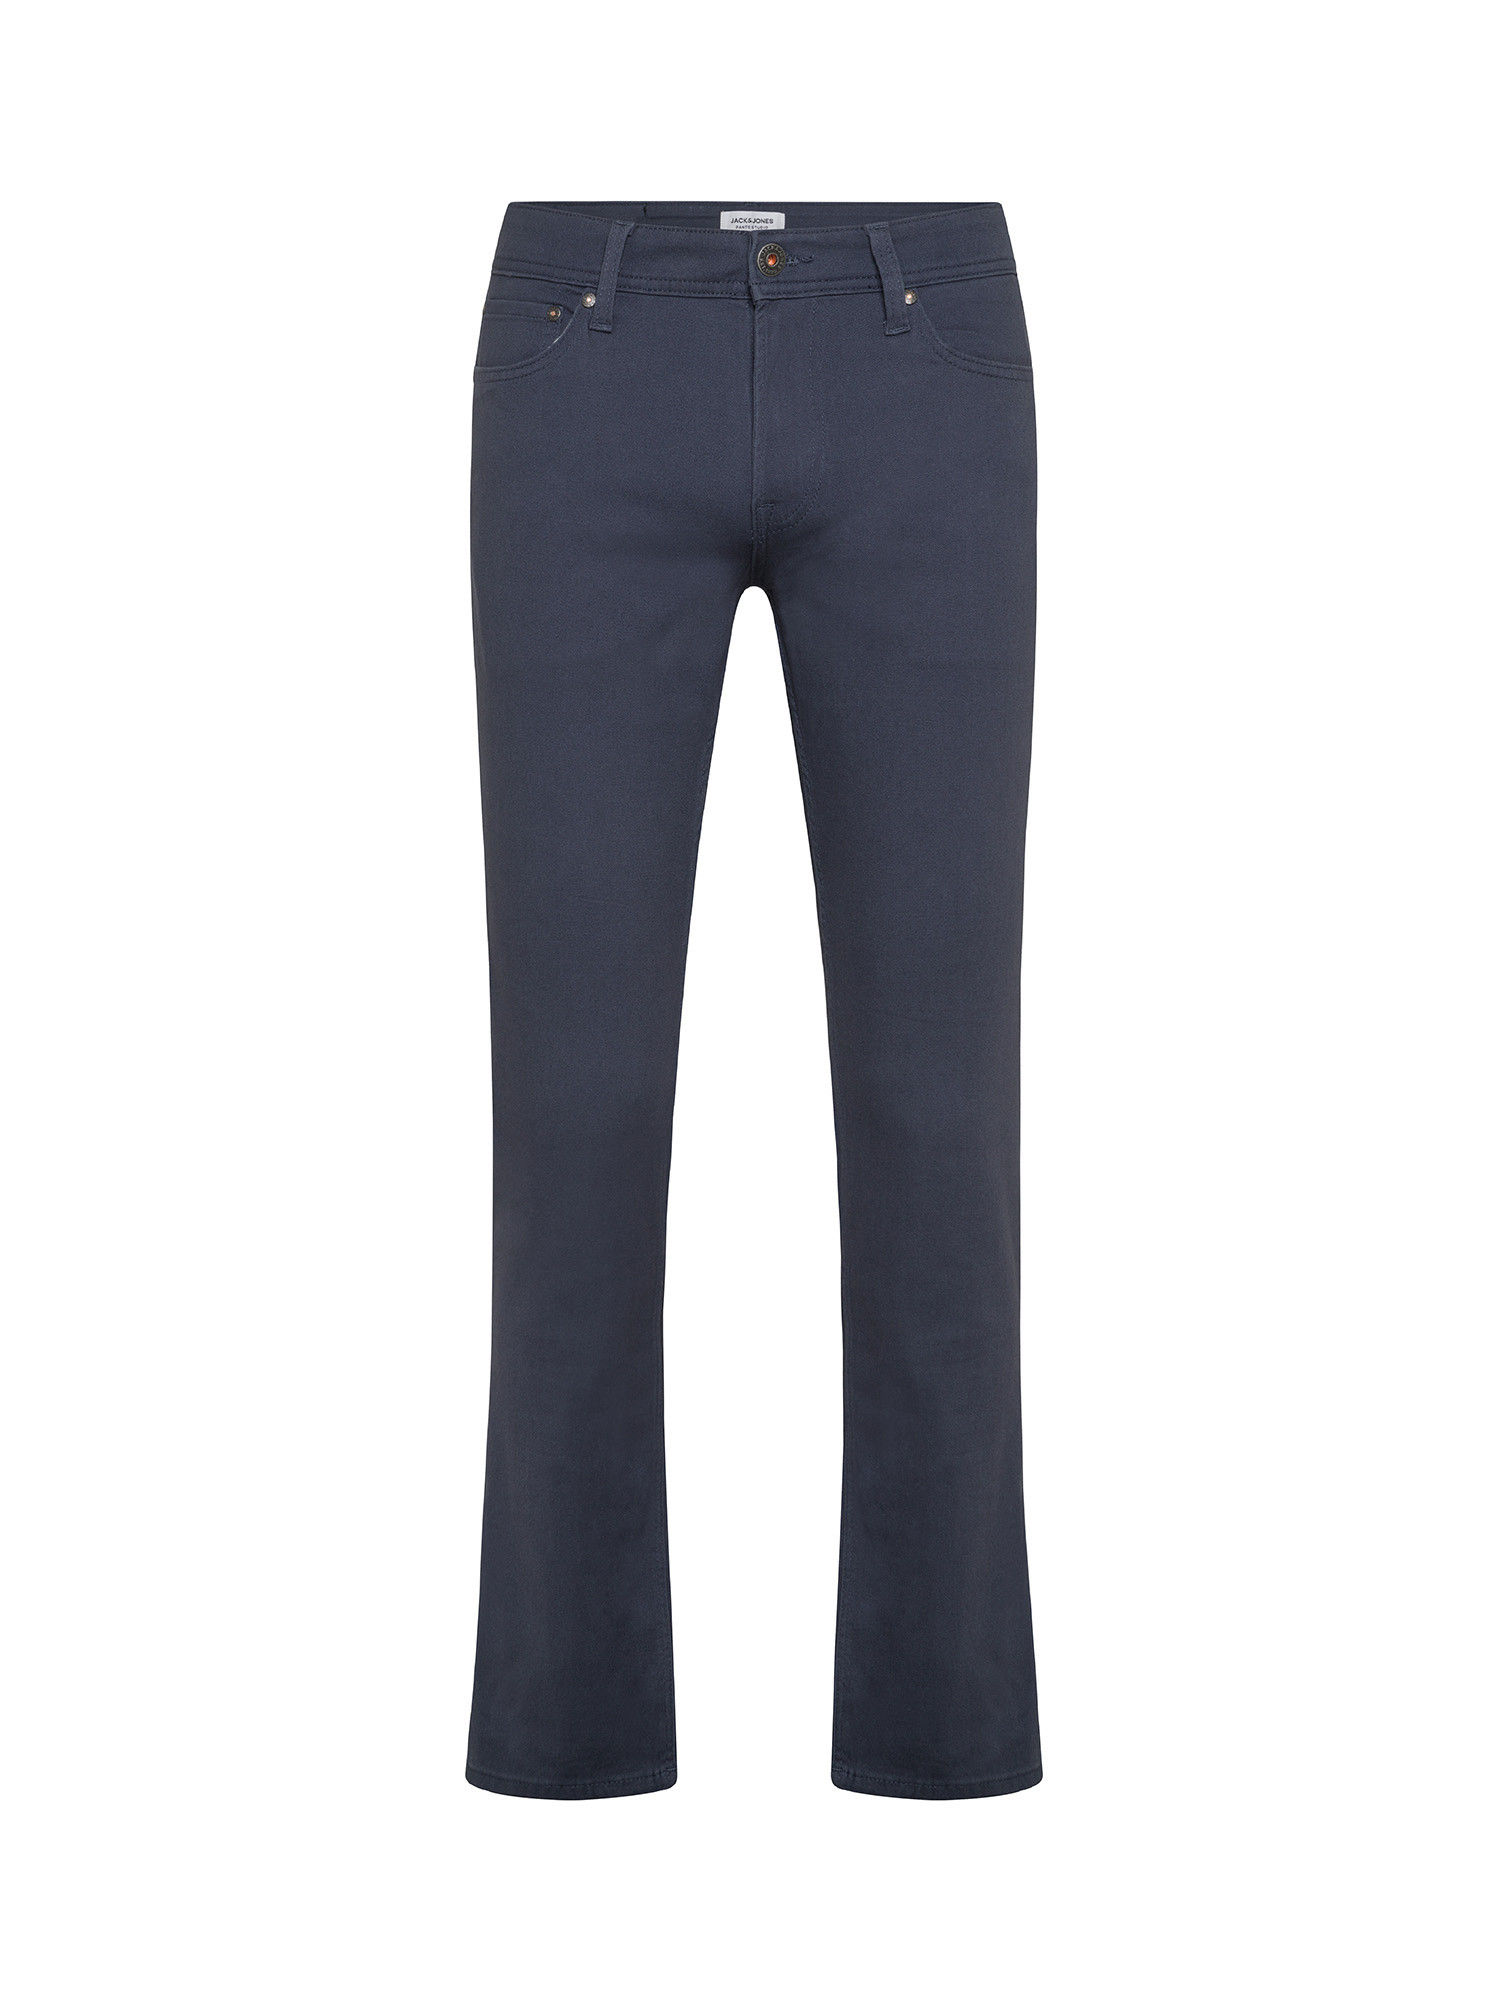 Jack & Jones - Pantaloni slim fit cinque tasche, Blu scuro, large image number 0